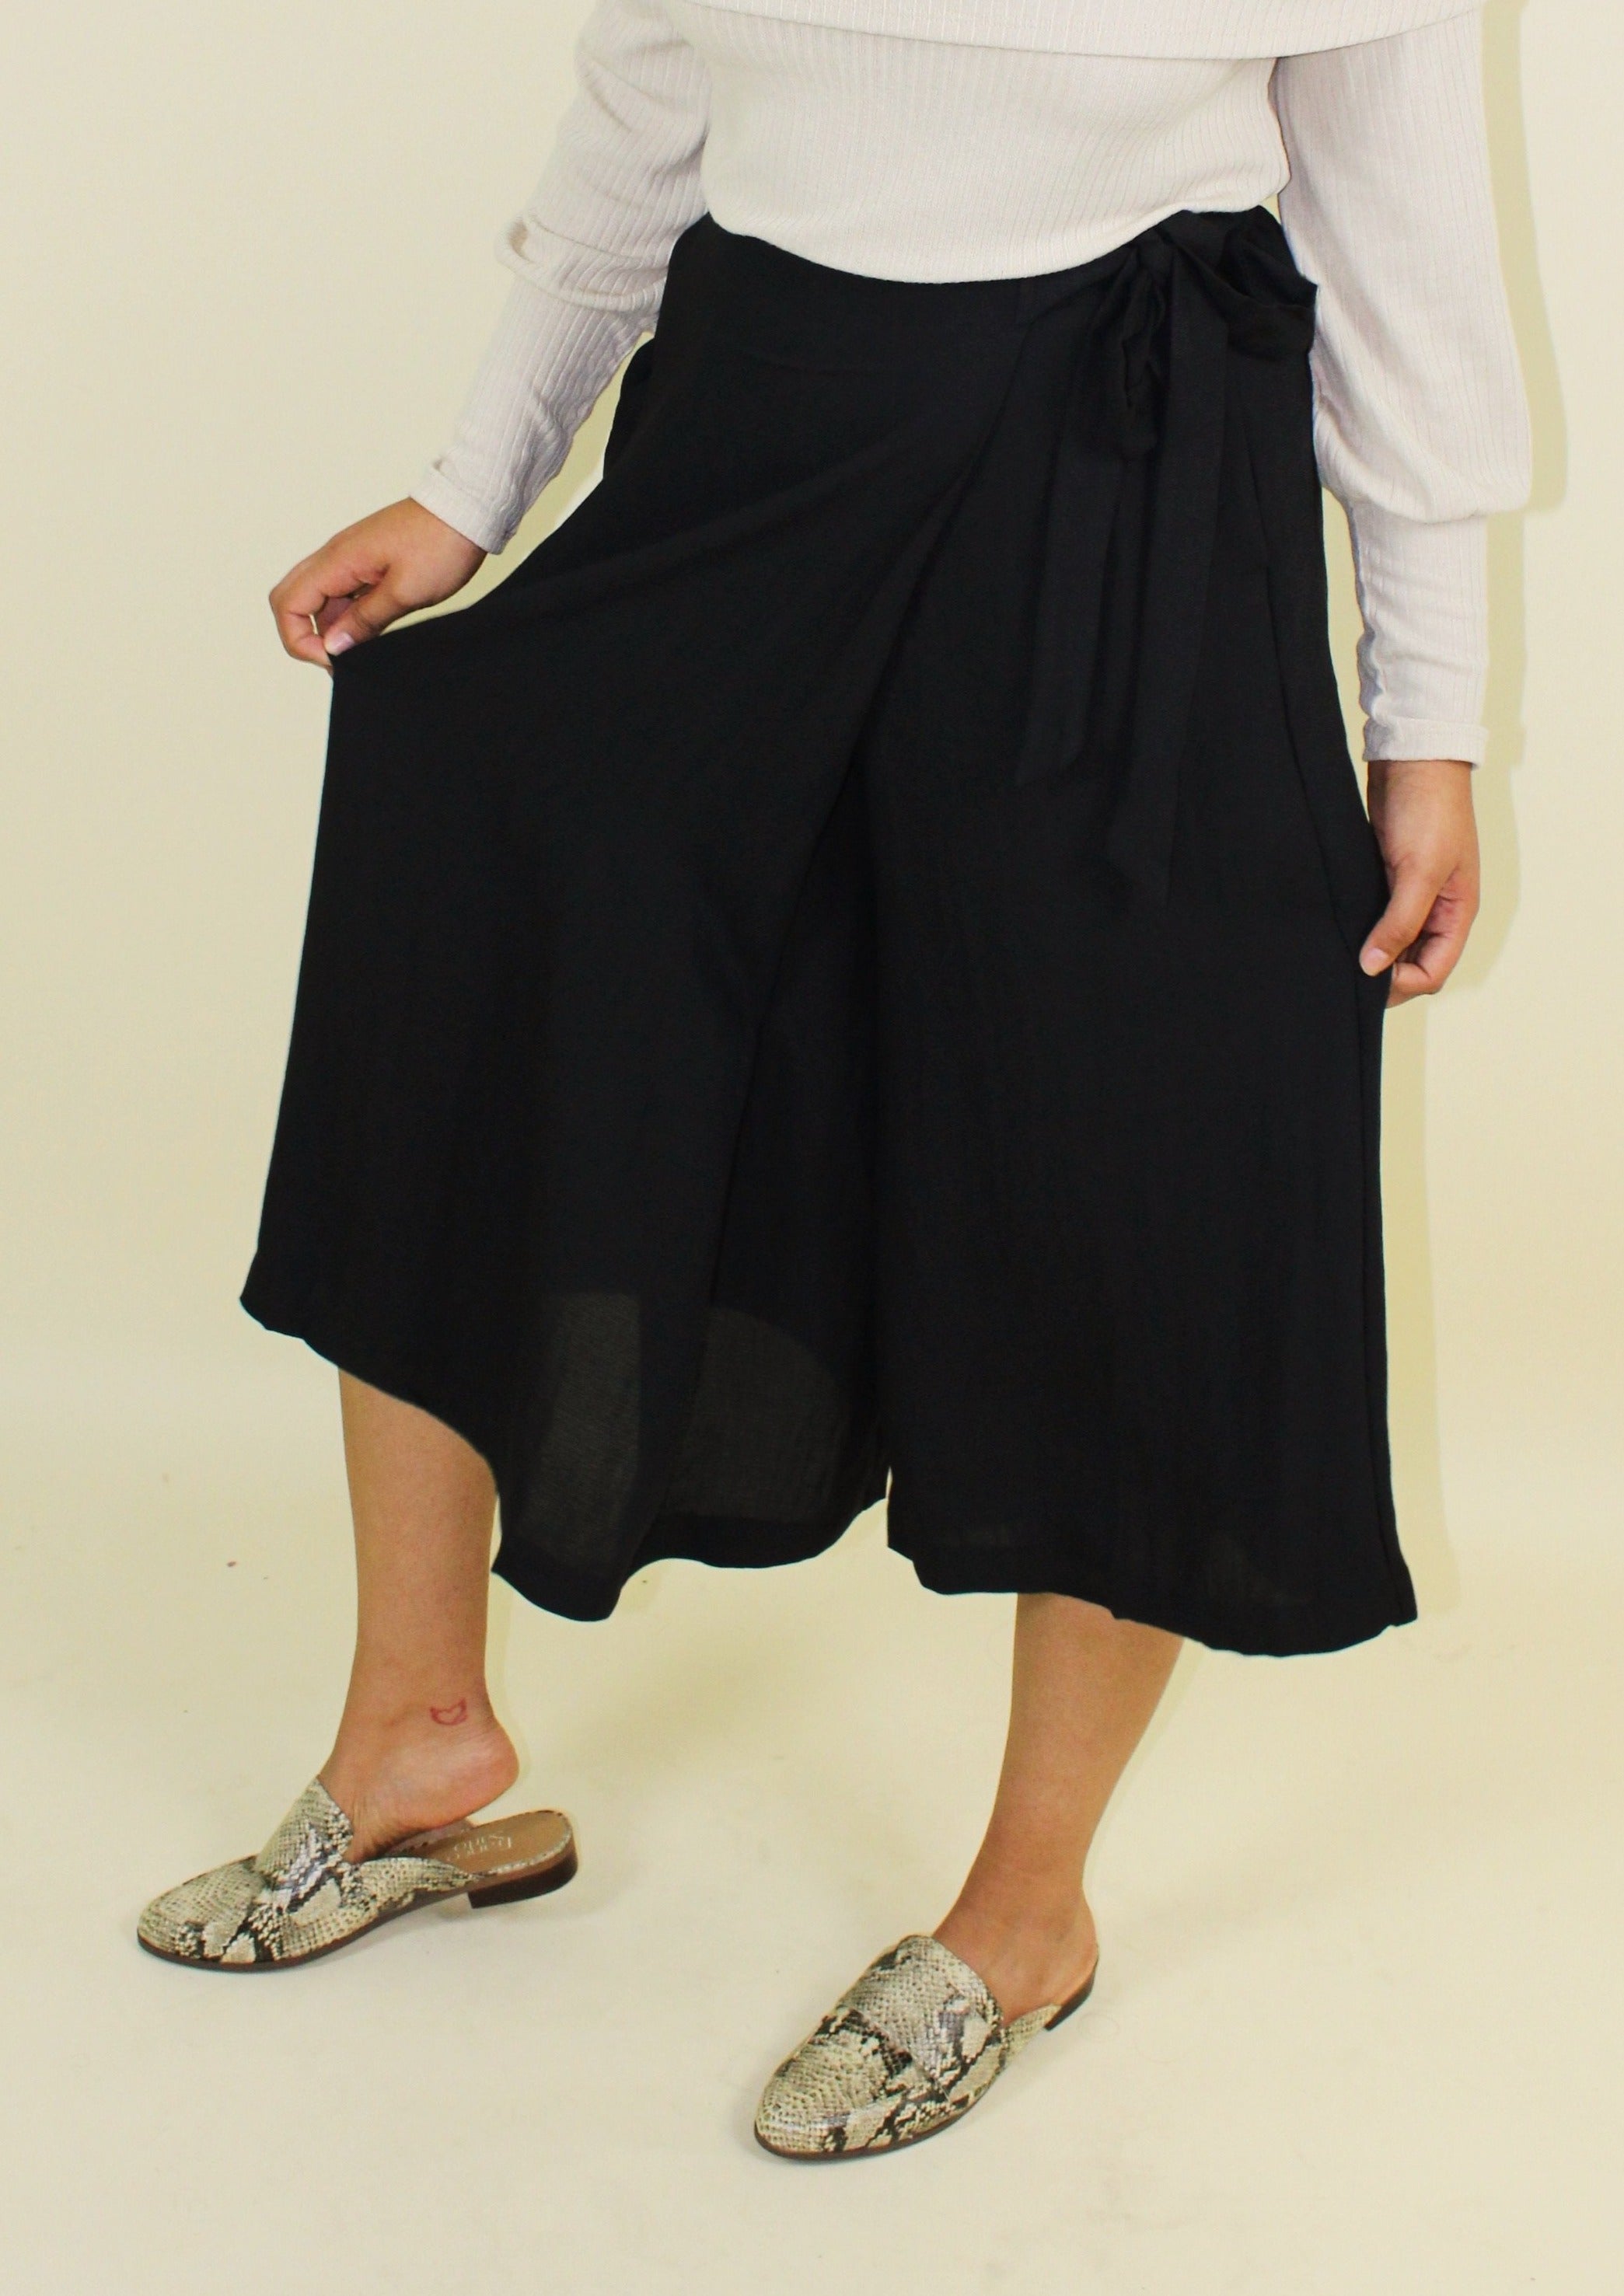 Black Split-Skirt Overlay Trouser with adjustable tie